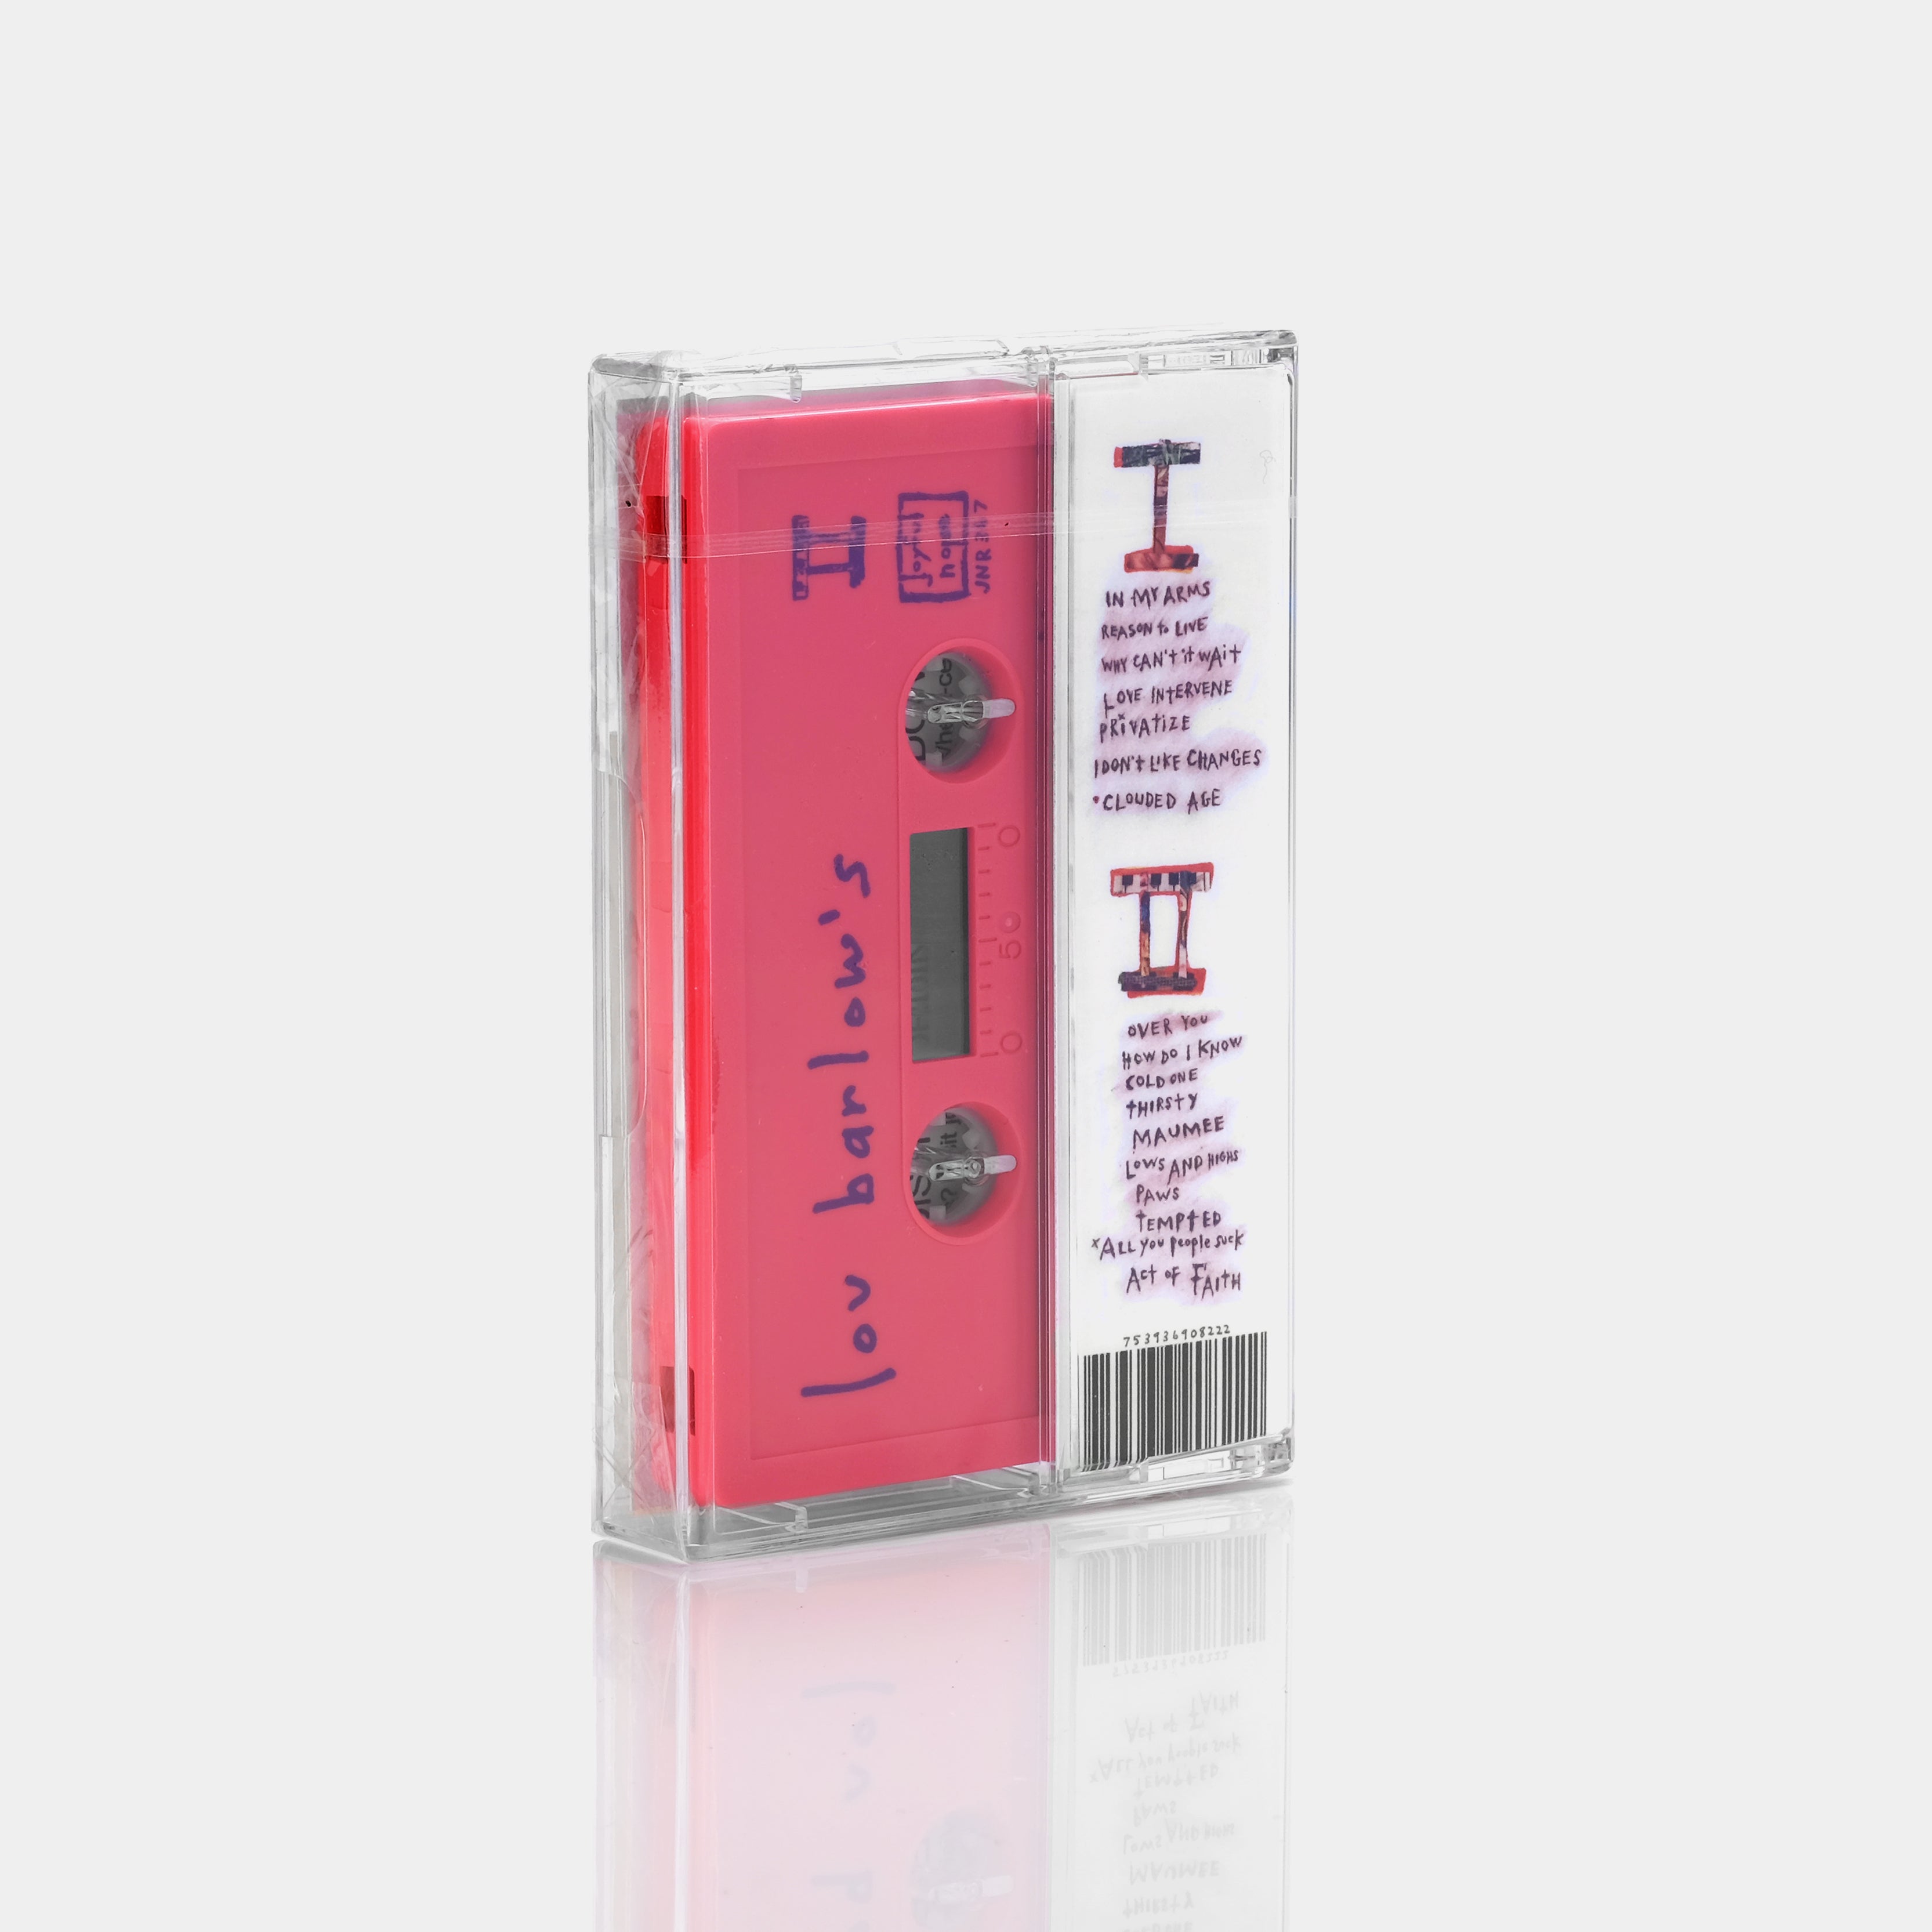 Lou Barlow - Reason To Live Cassette Tape